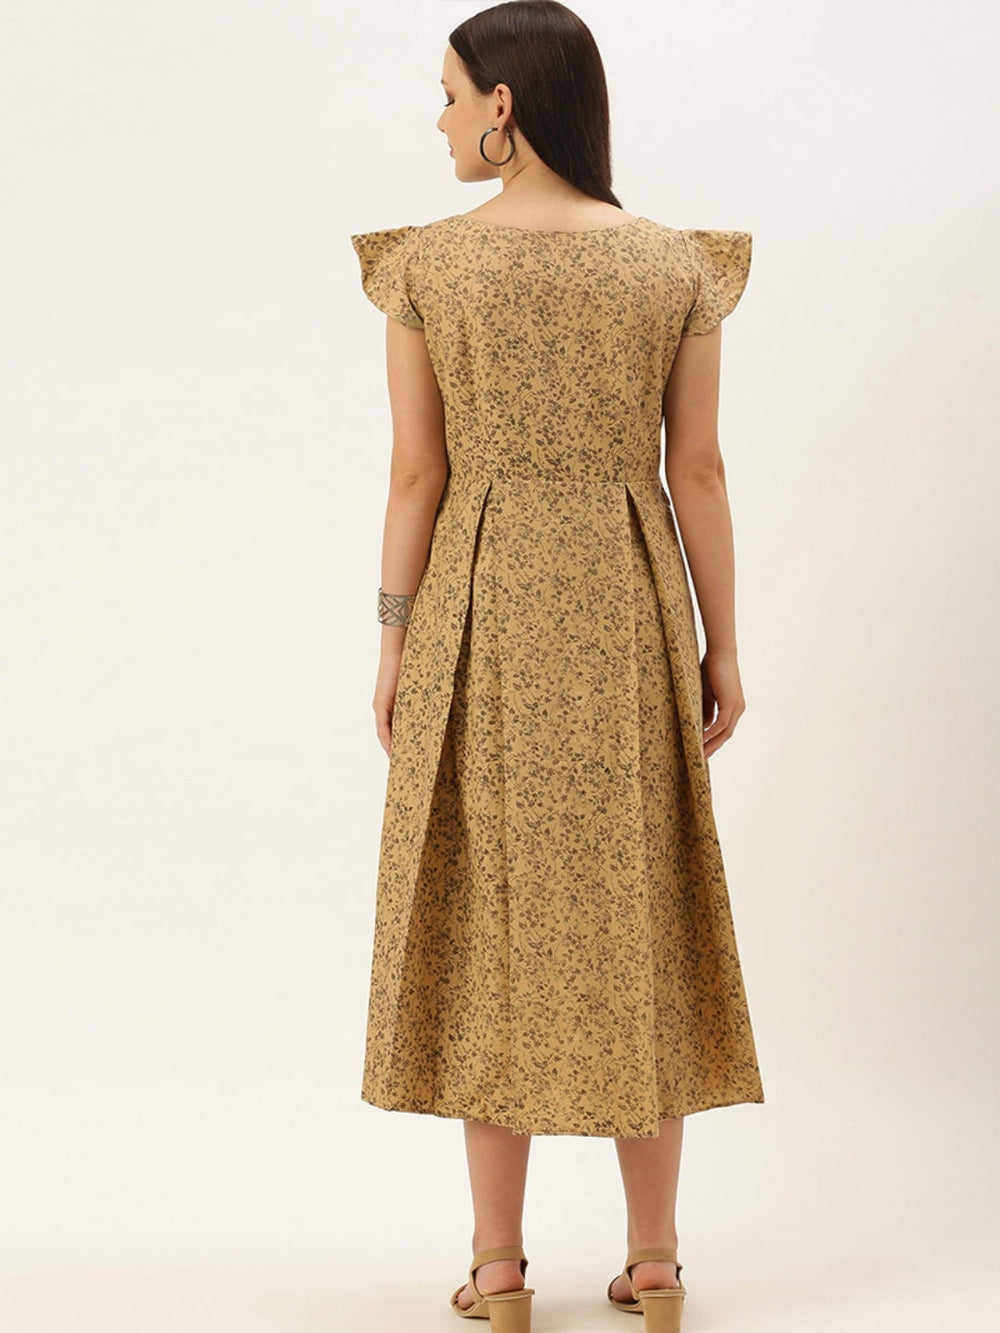 Beige-Printed-Rayon-Calf-Length-Dress